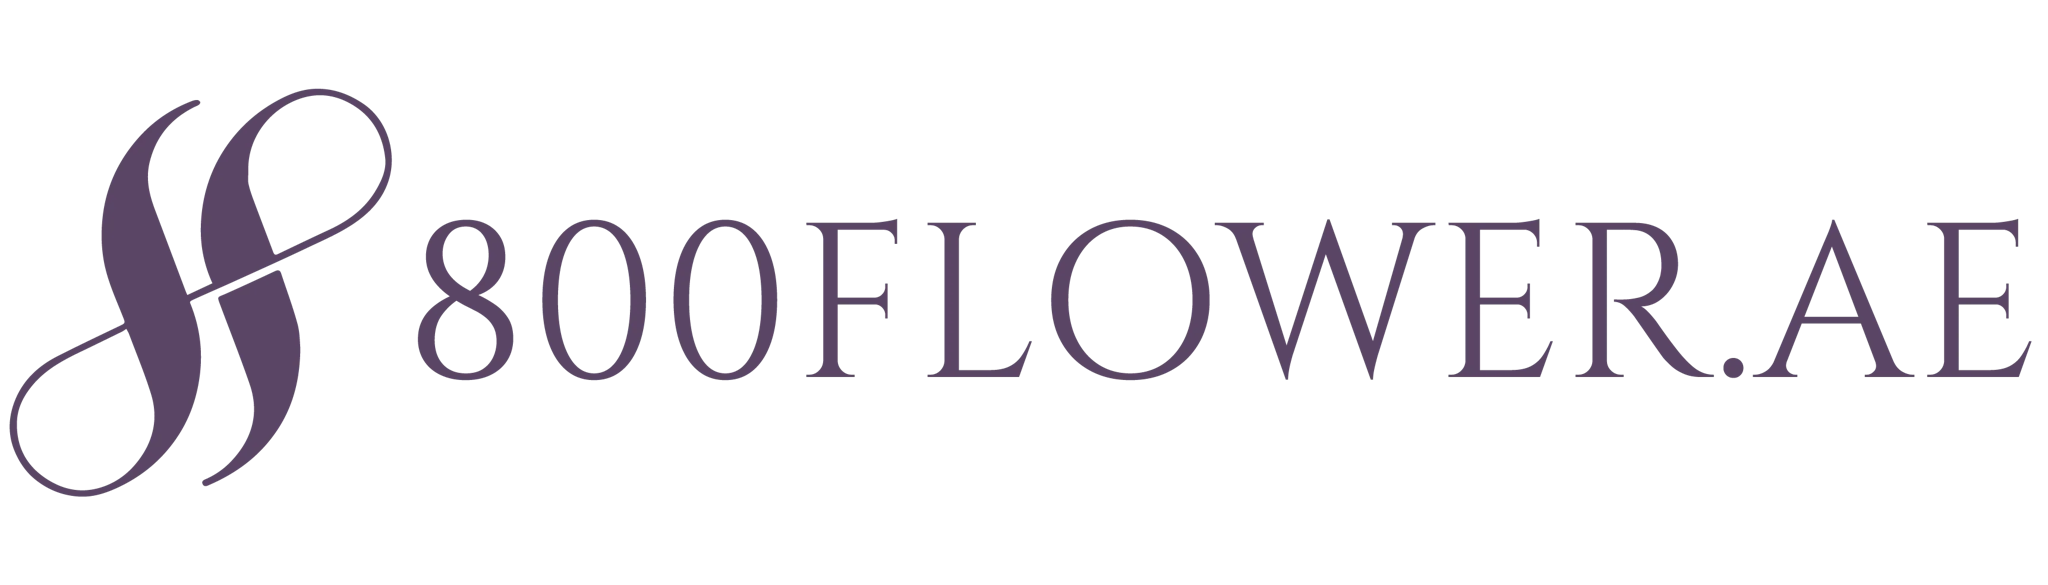 800Flower.ae Brand Logo